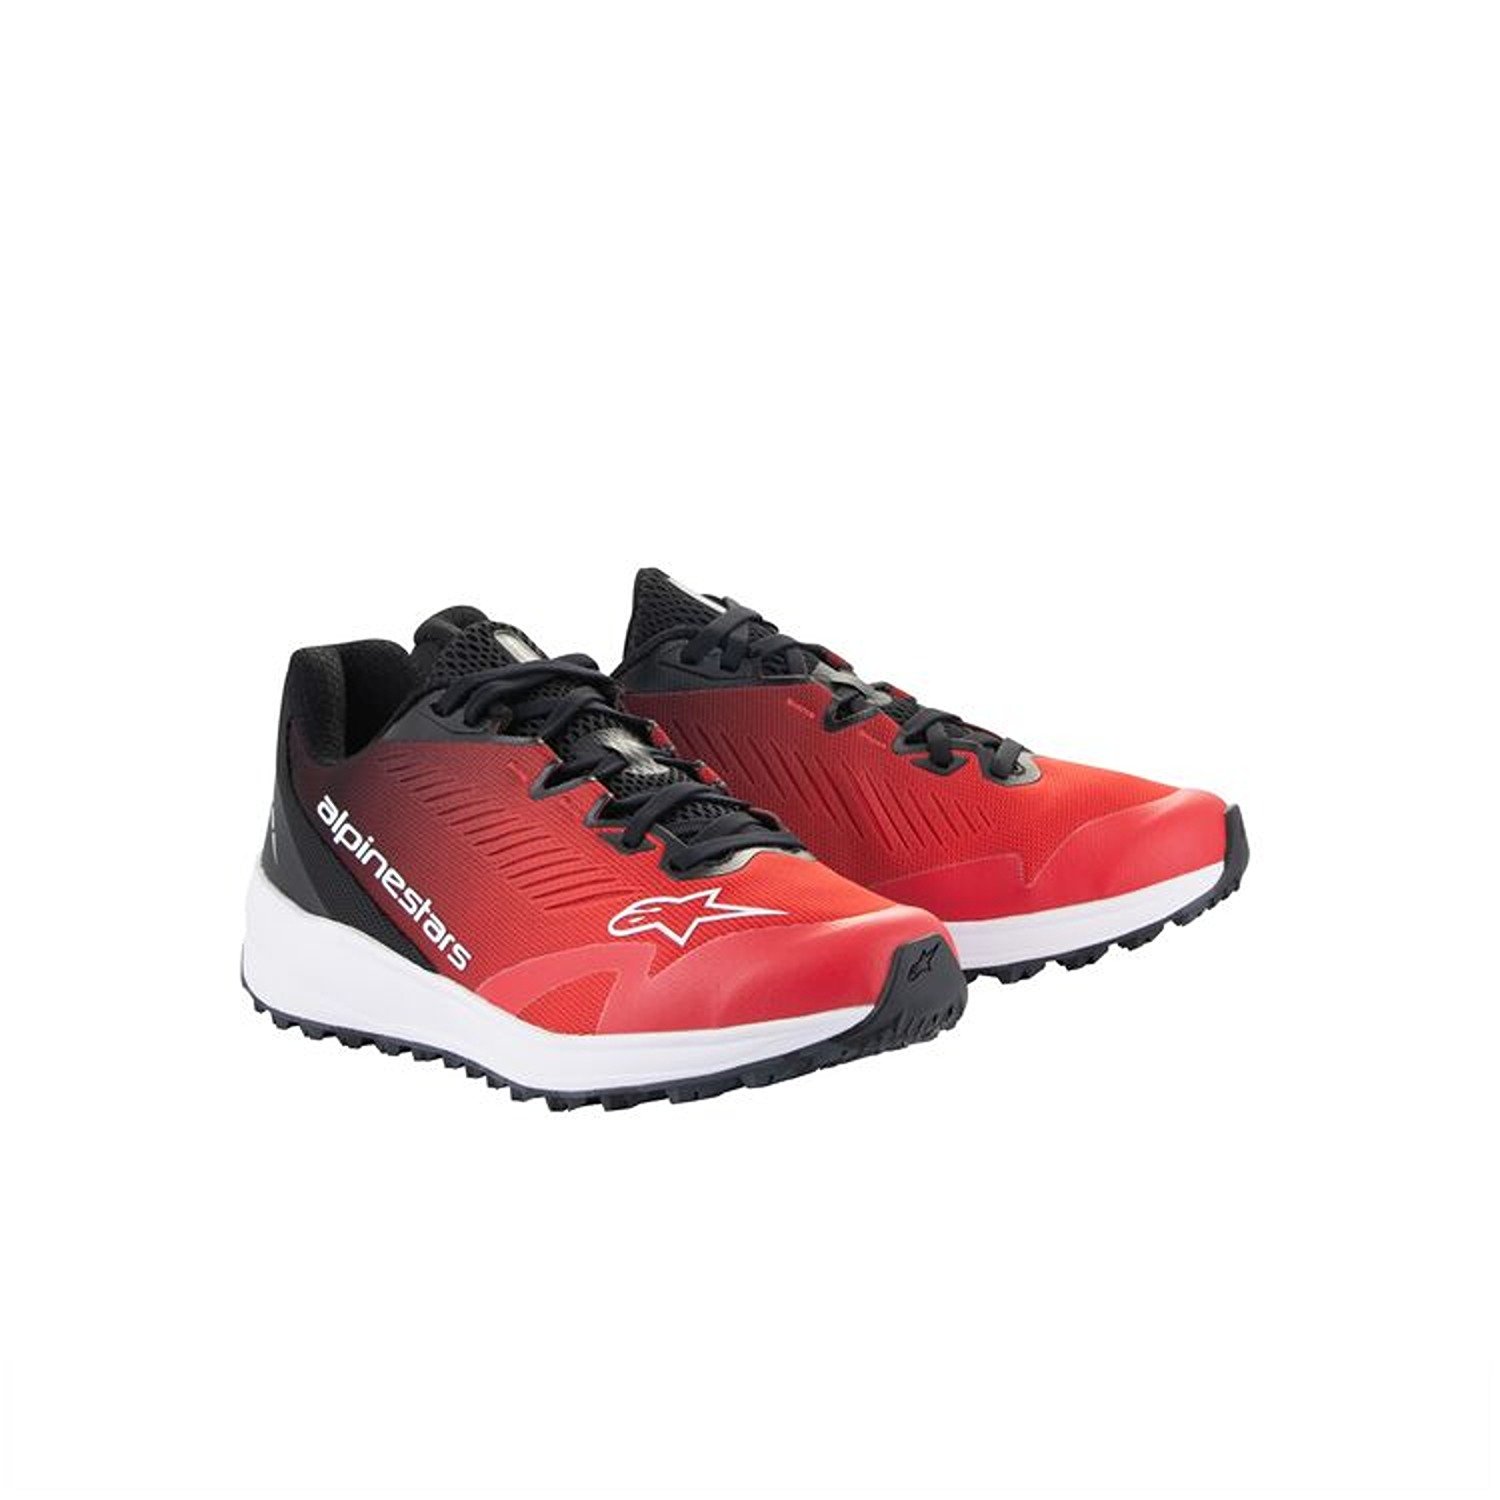 Image of Alpinestars Meta Road V2 Shoes Red Black White Size US 75 ID 8059347381435